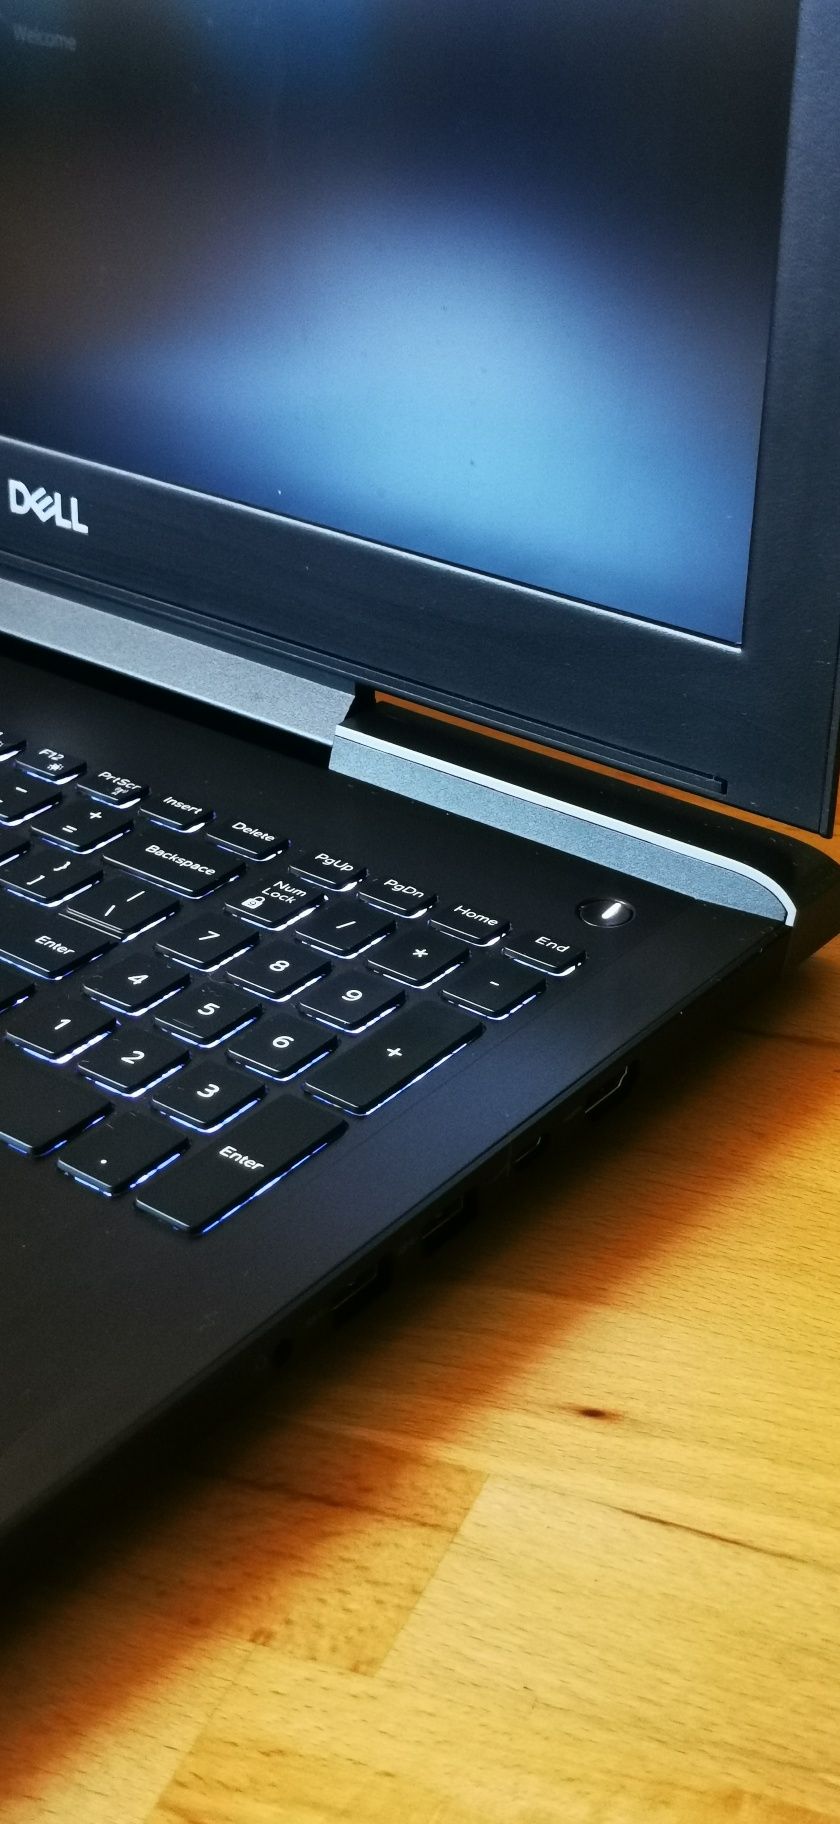 Laptop Dell inspiron 15 7000 (16gb ram, gtx 1060)